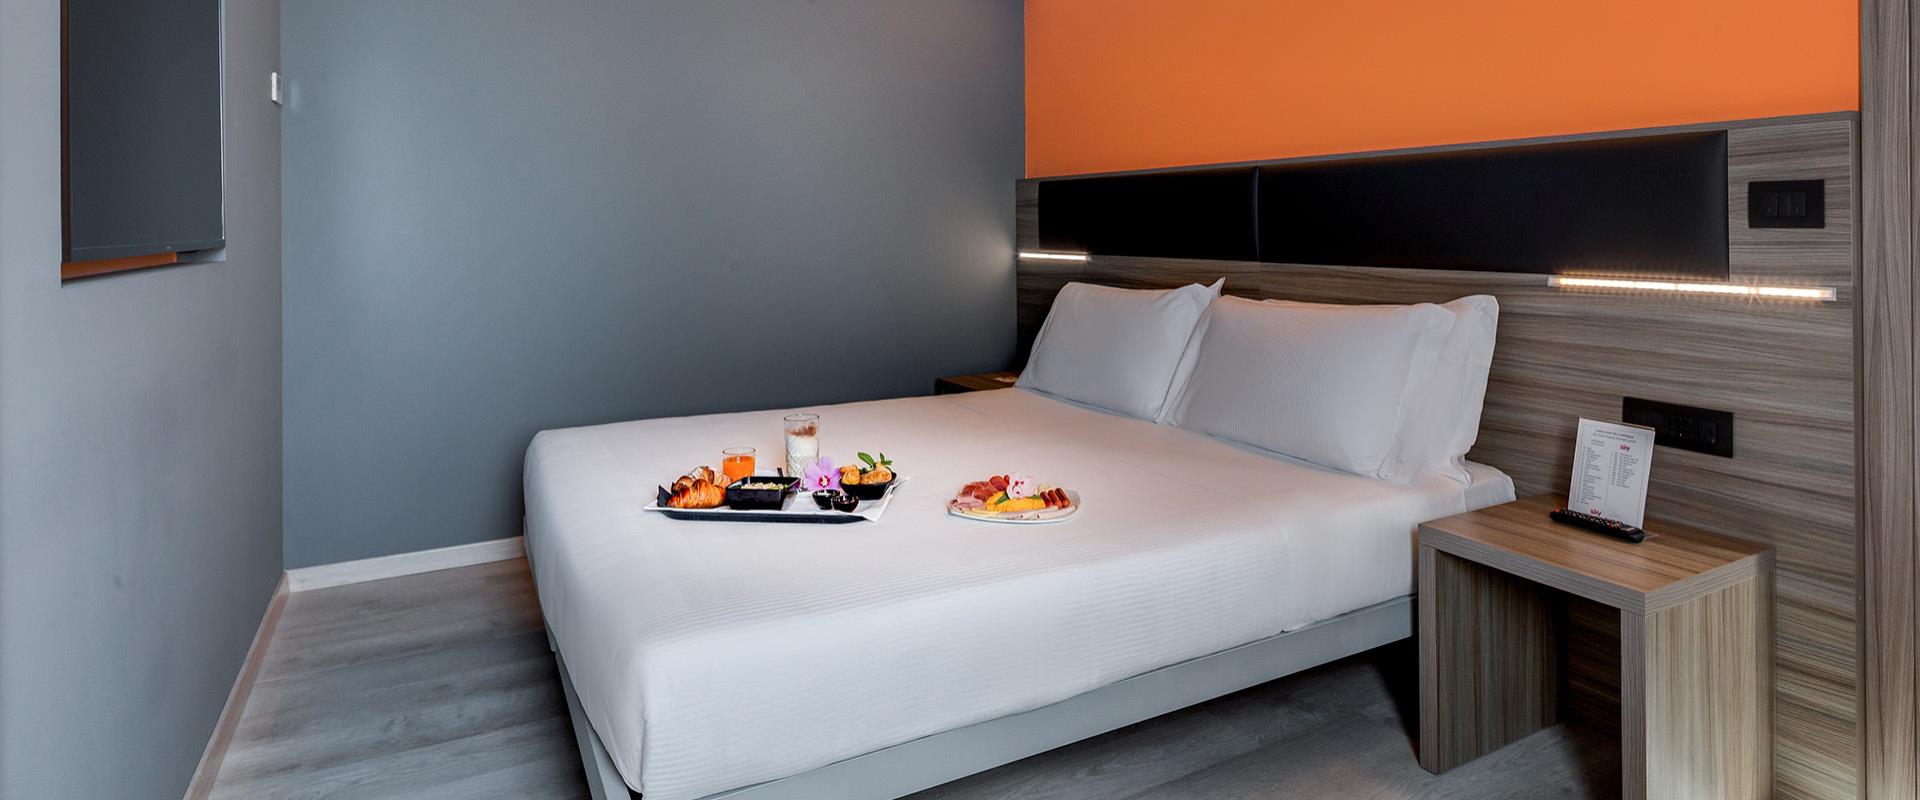 Comfort e servizi nelle camere del Best Western Hotel Aries 4 stelle